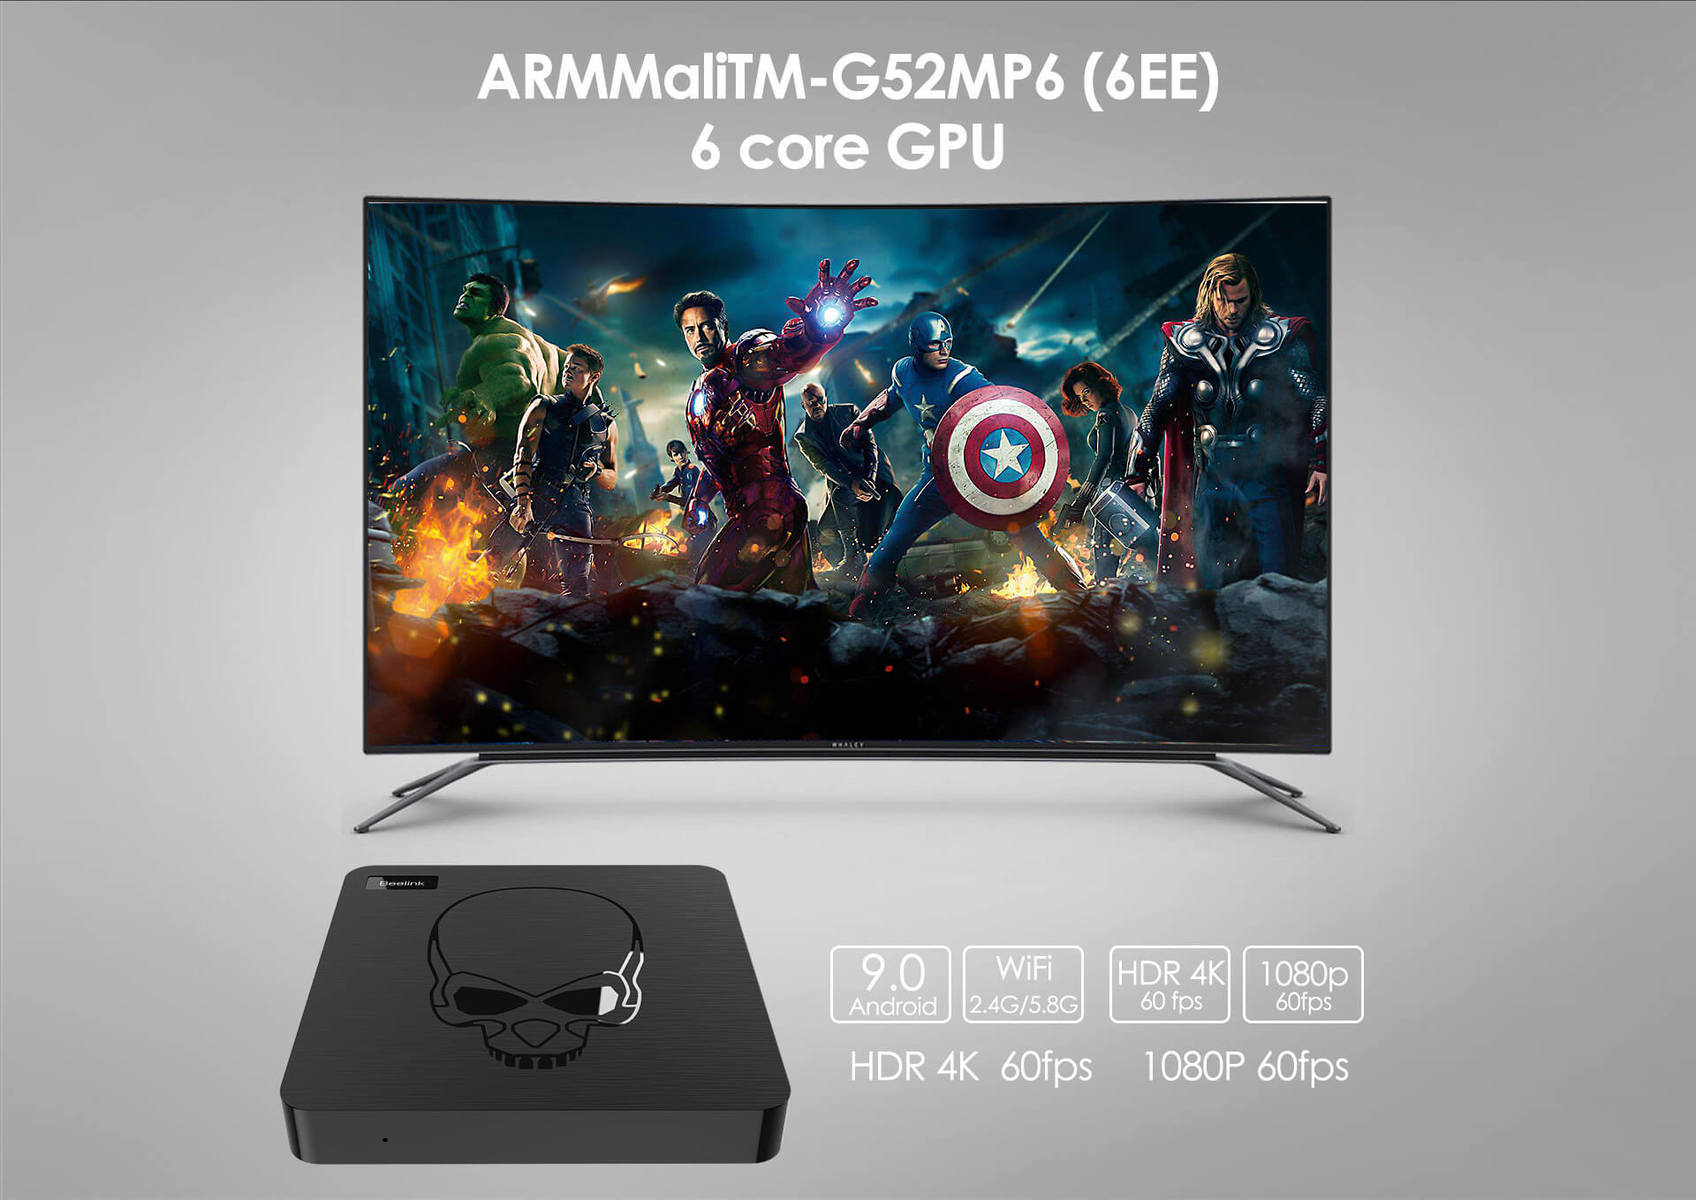 TV box Beelink GT-King S922X 4/64GB eMMC Android 9.0 TV